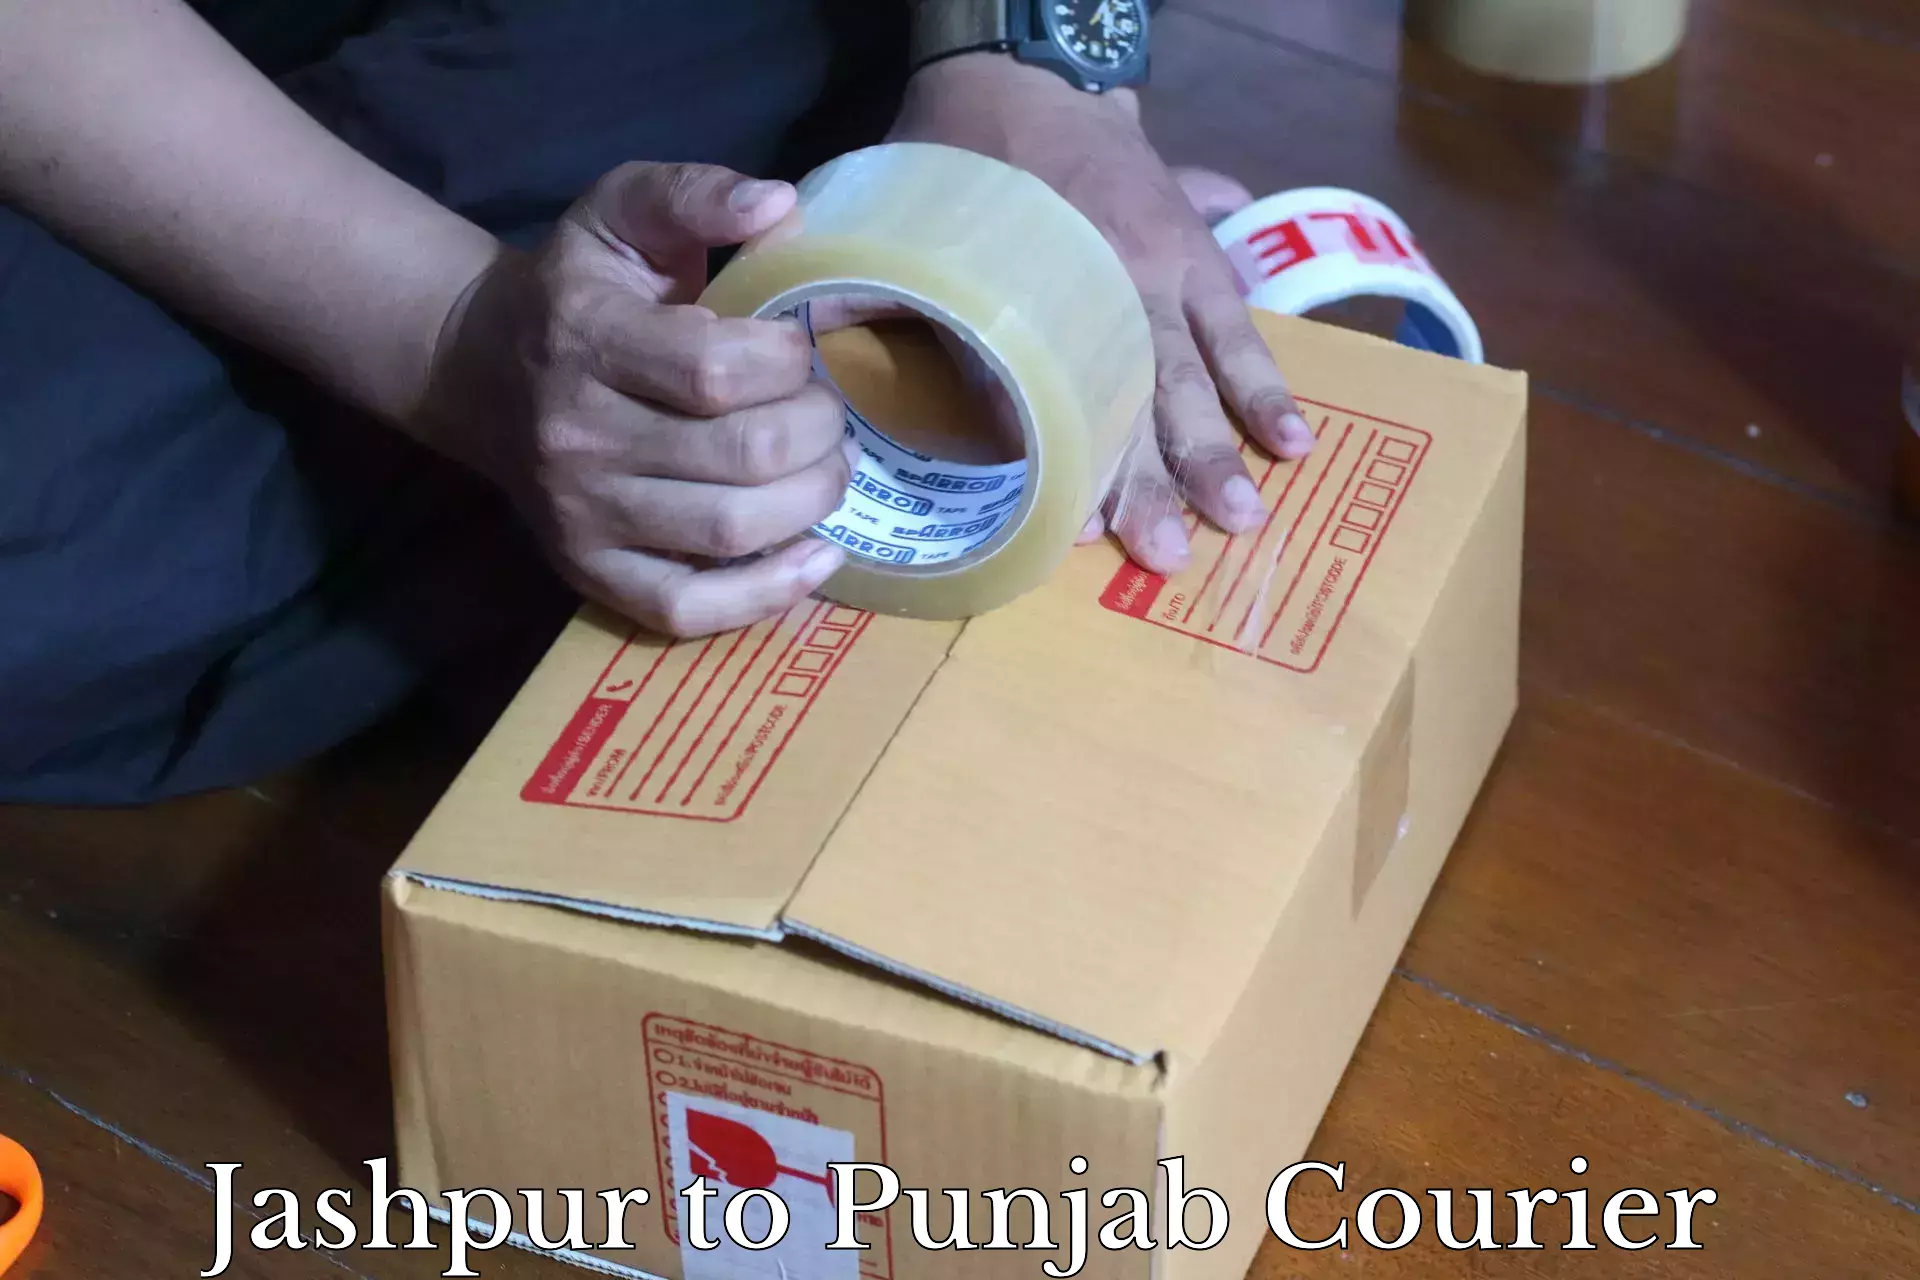 Digital courier platforms Jashpur to Pathankot